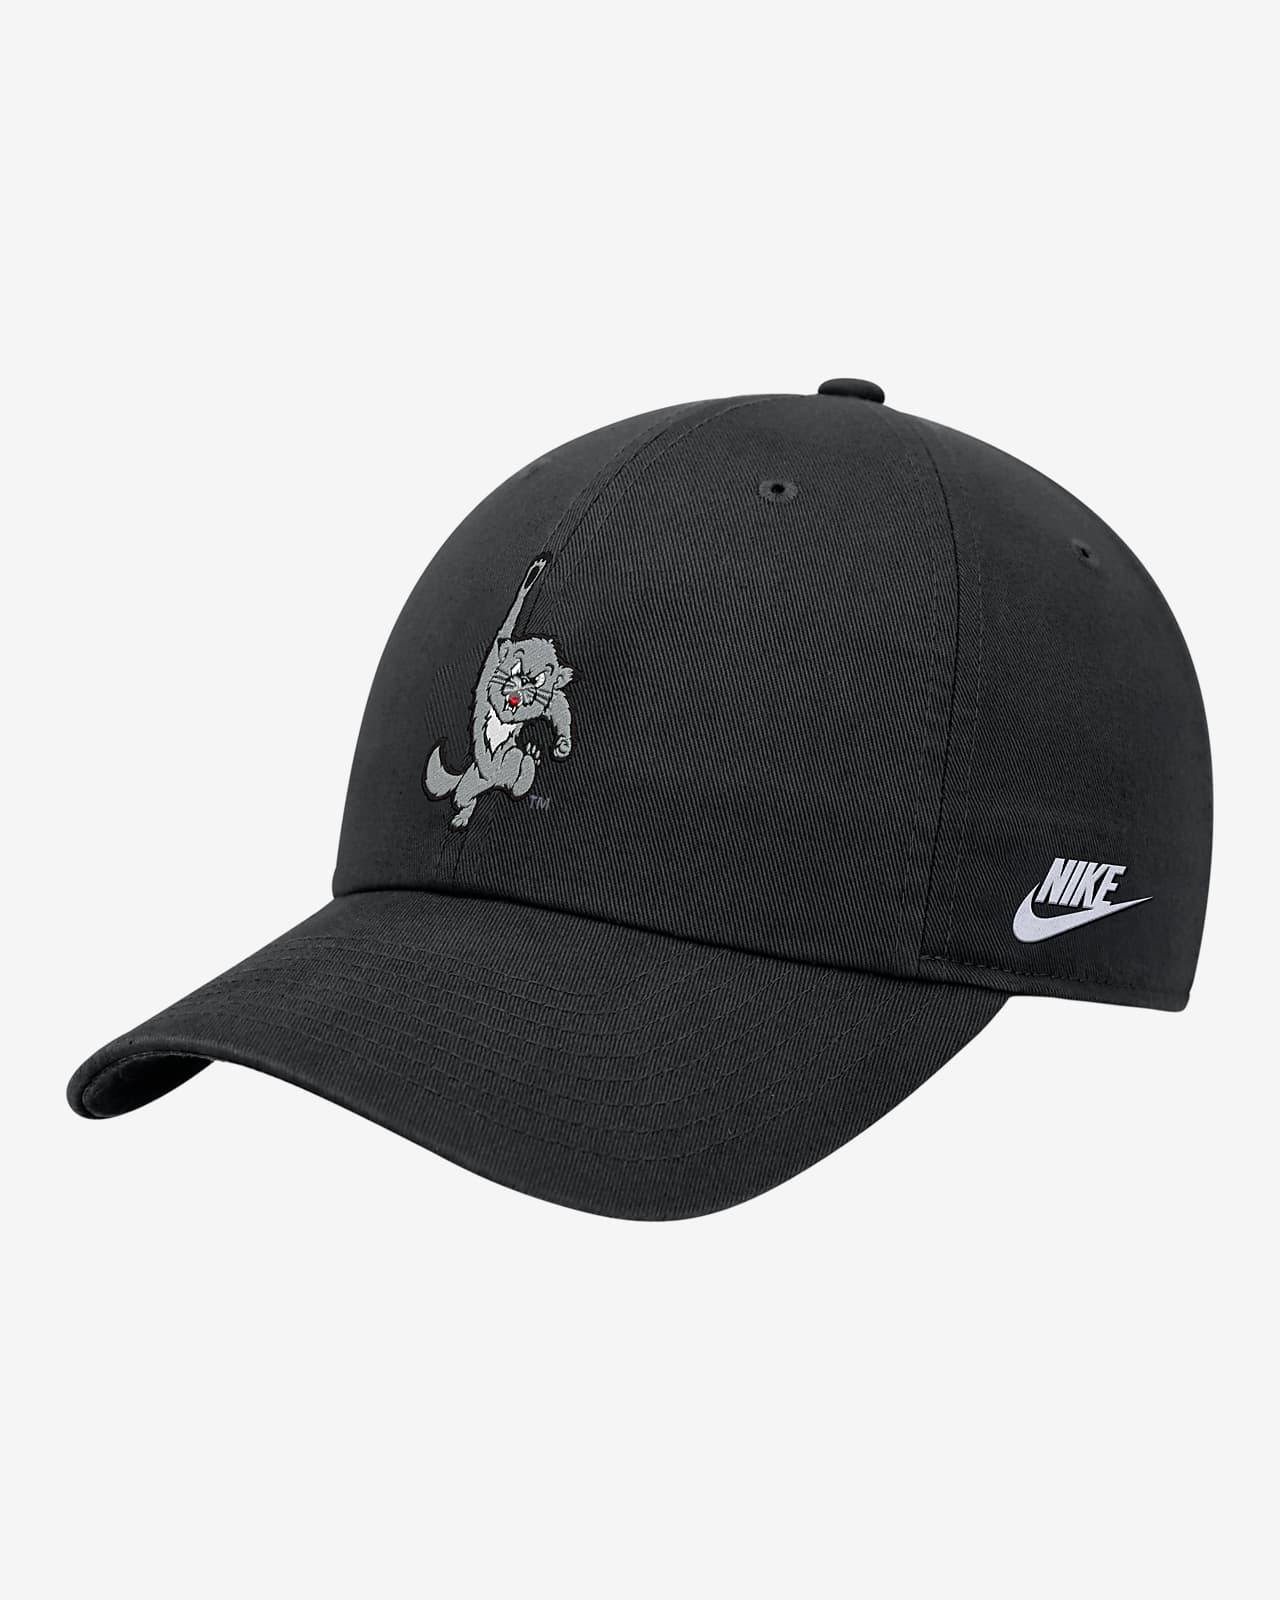 Cincinnati Nike College Cap